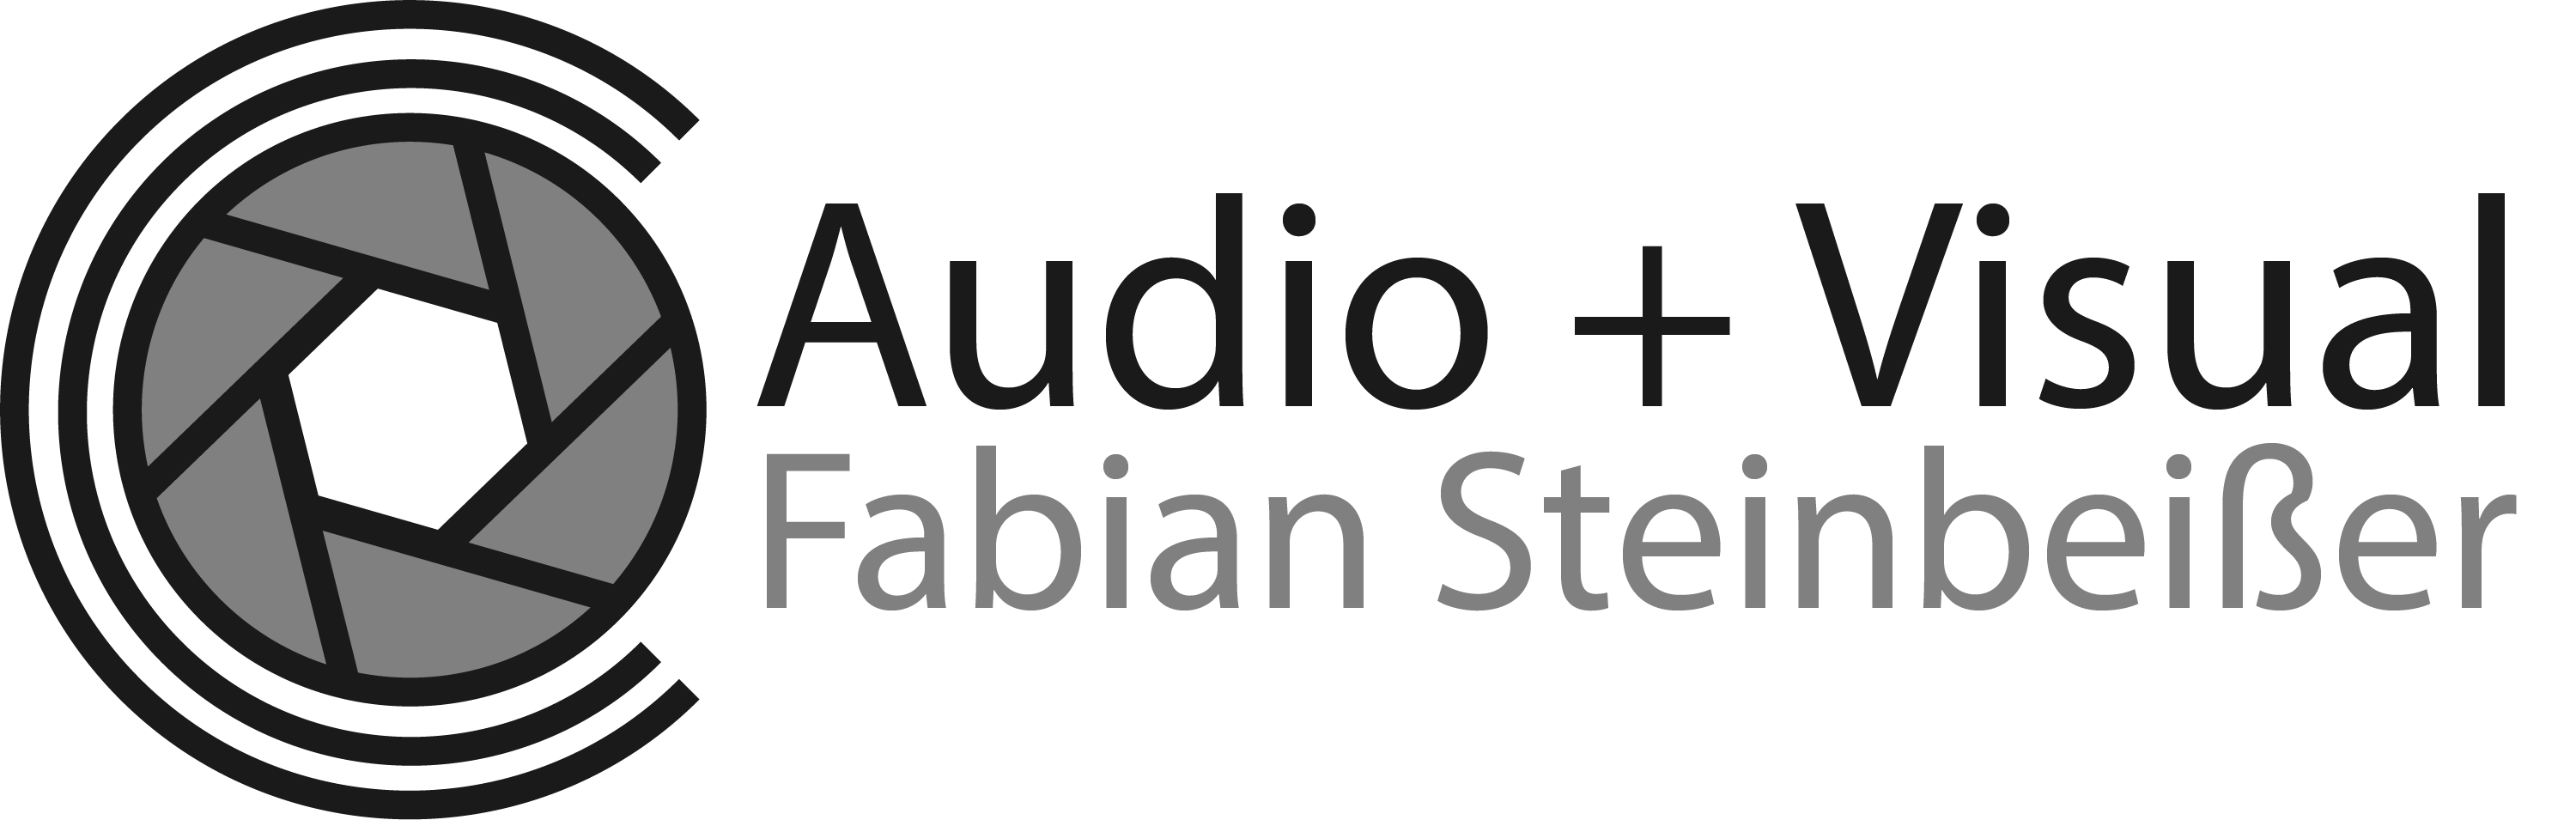 Audio + Visual Fabian Steinbeißer